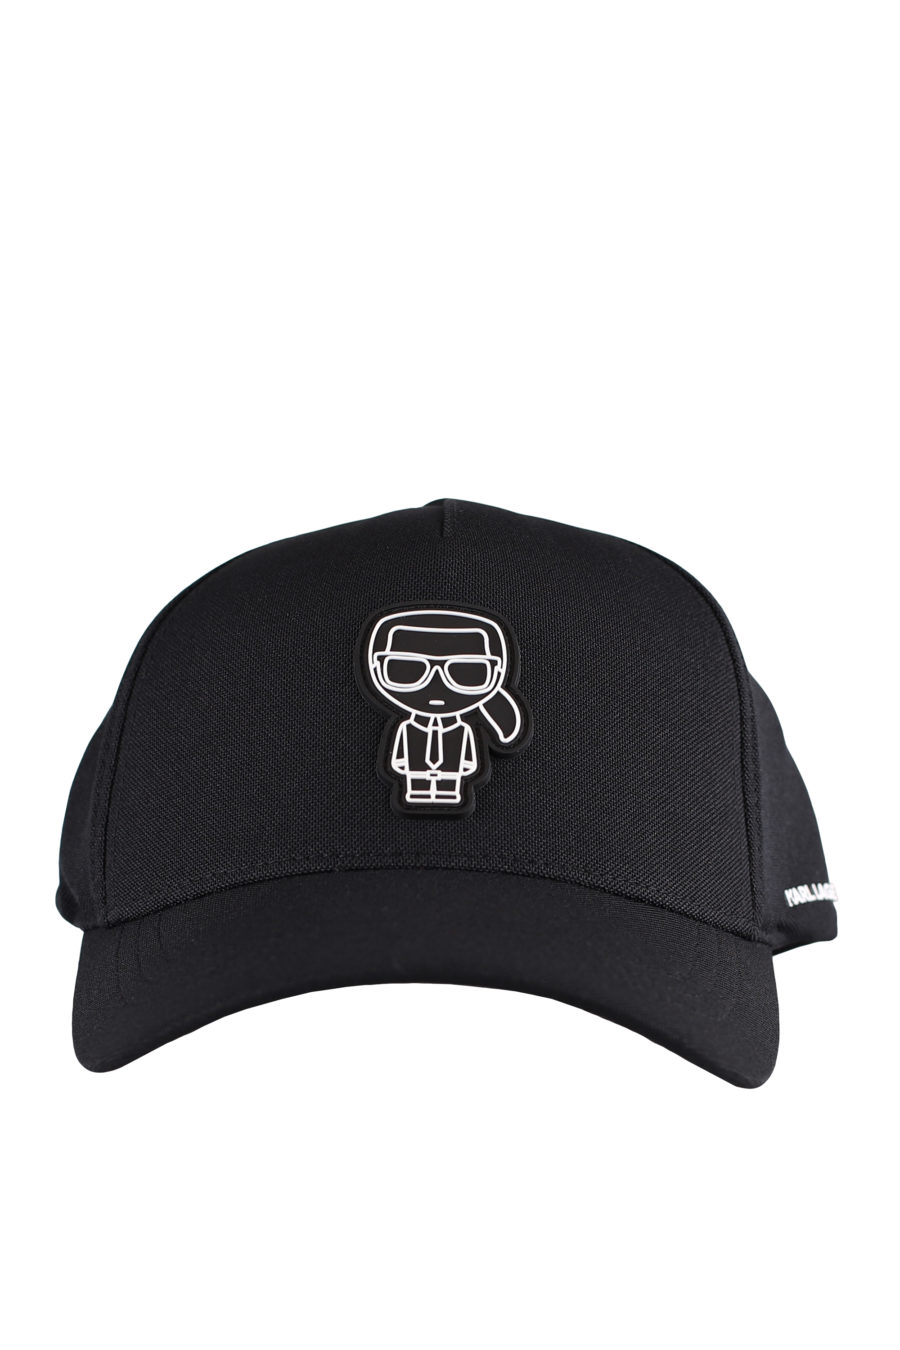 Black cap with white rubberised "Karl" - IMG 9601